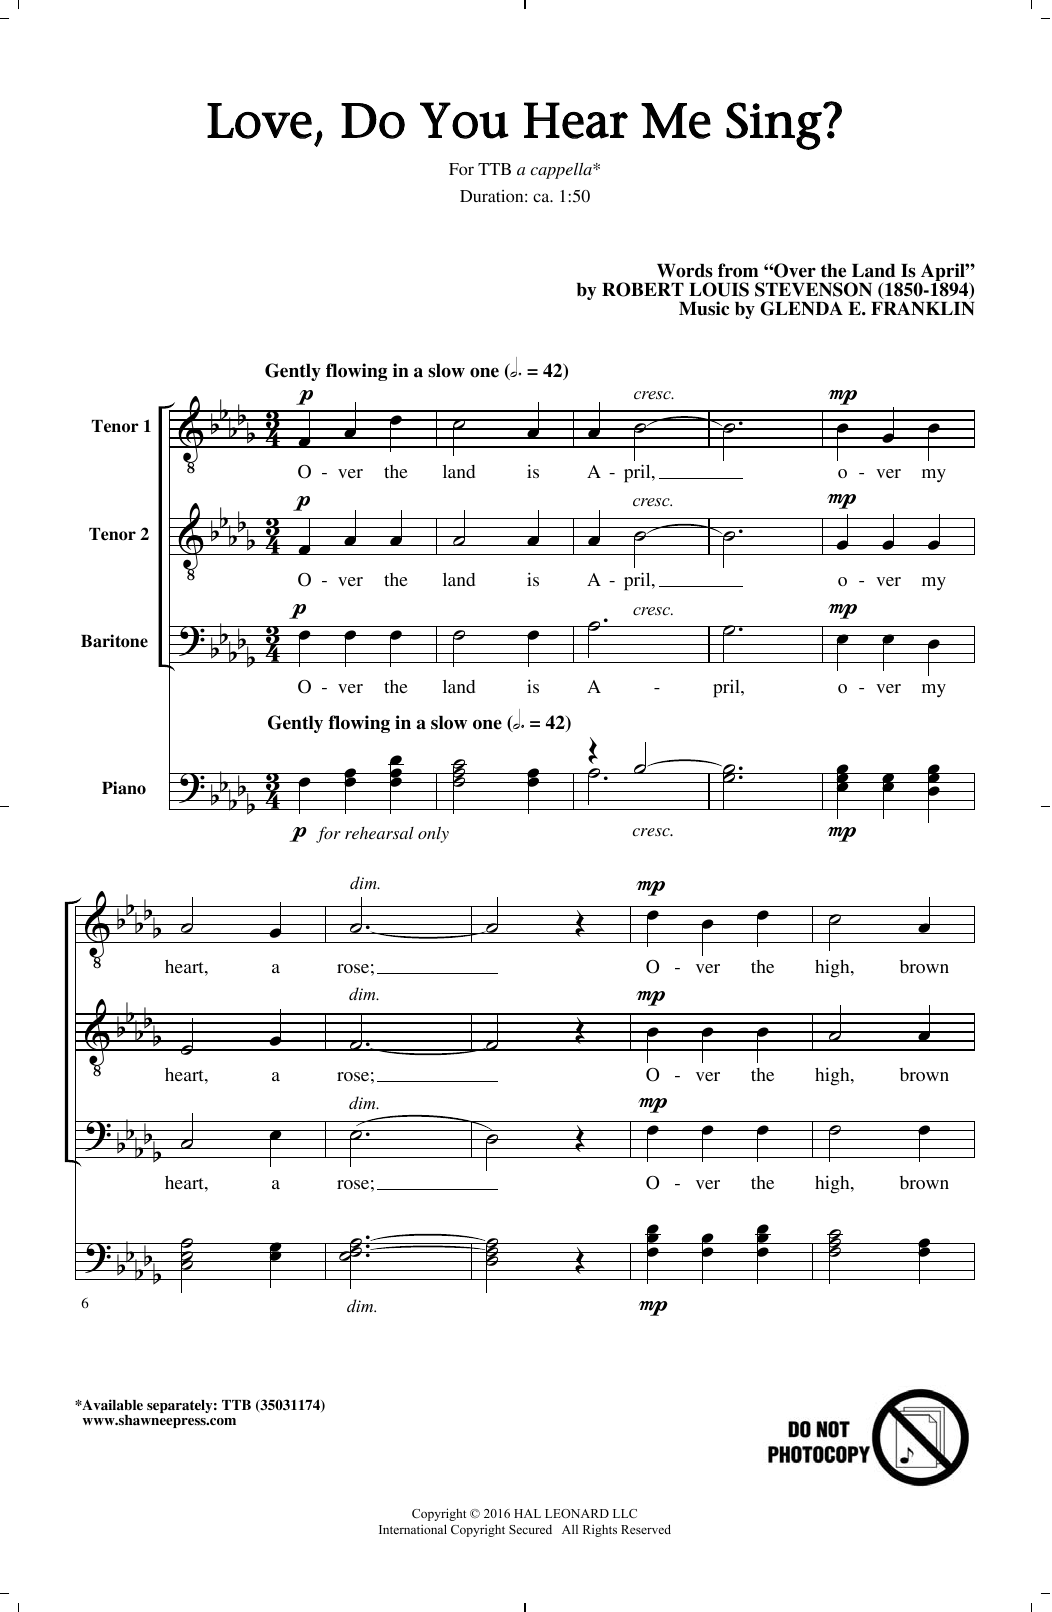 Glenda E. Franklin Love, Do You Hear Me Sing? Sheet Music Notes & Chords for Choral TTB - Download or Print PDF